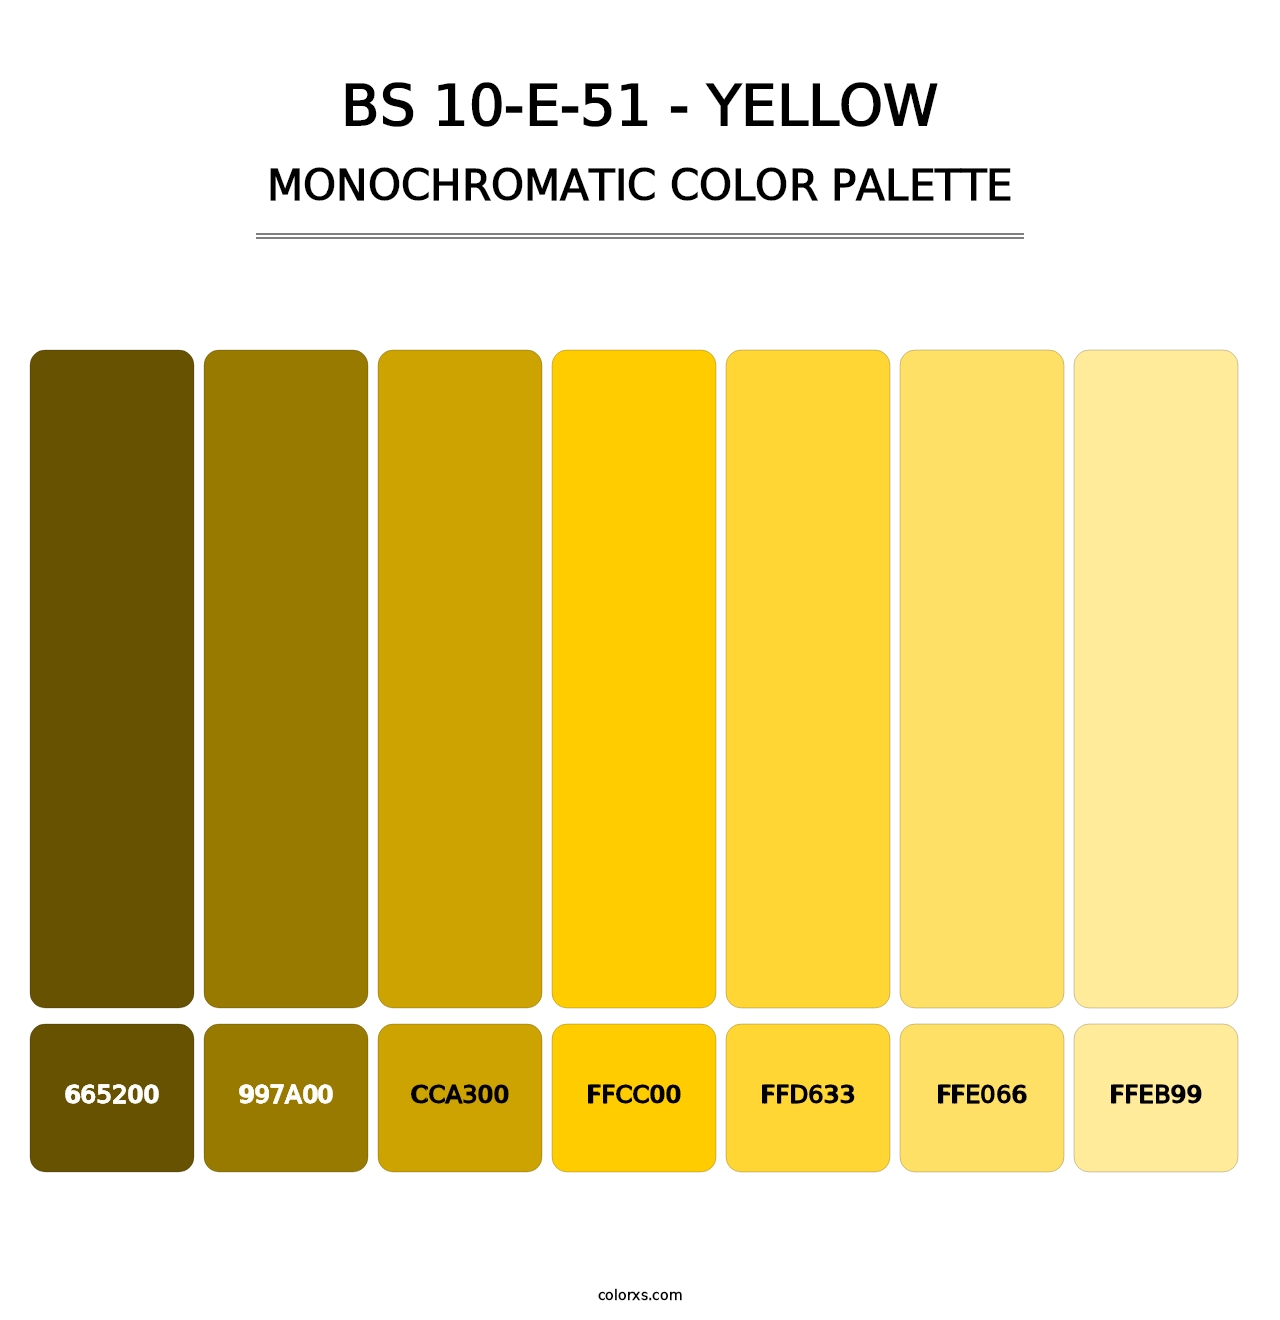 BS 10-E-51 - Yellow - Monochromatic Color Palette